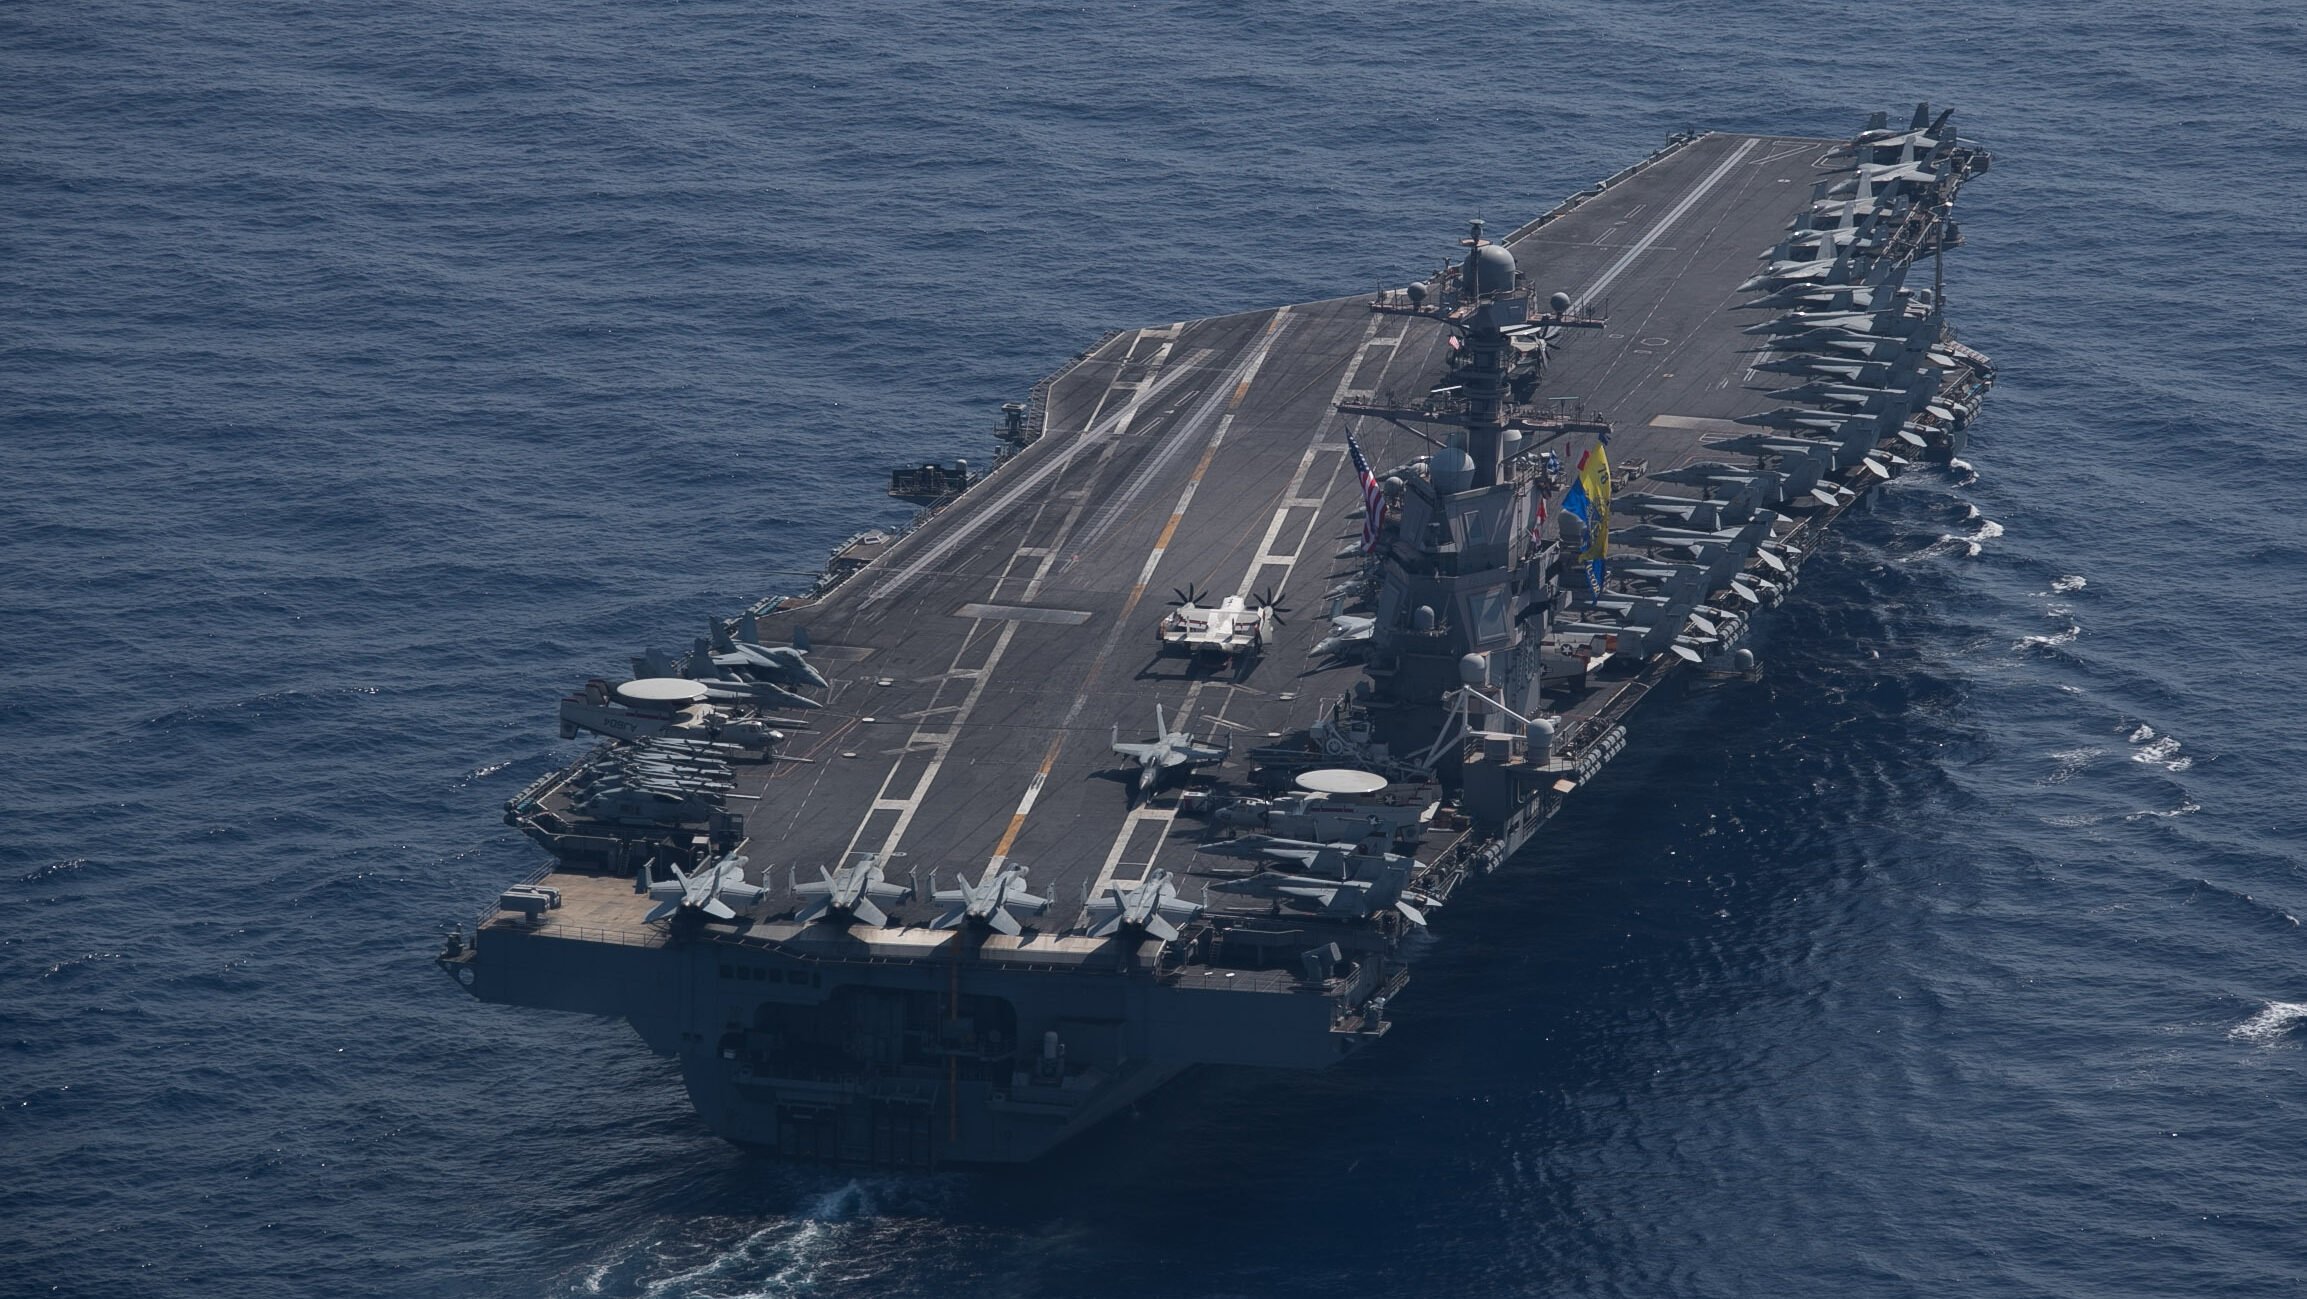 Tweaking the ‘defense posture’: USS Gerald Ford strike group to leave the Mediterranean